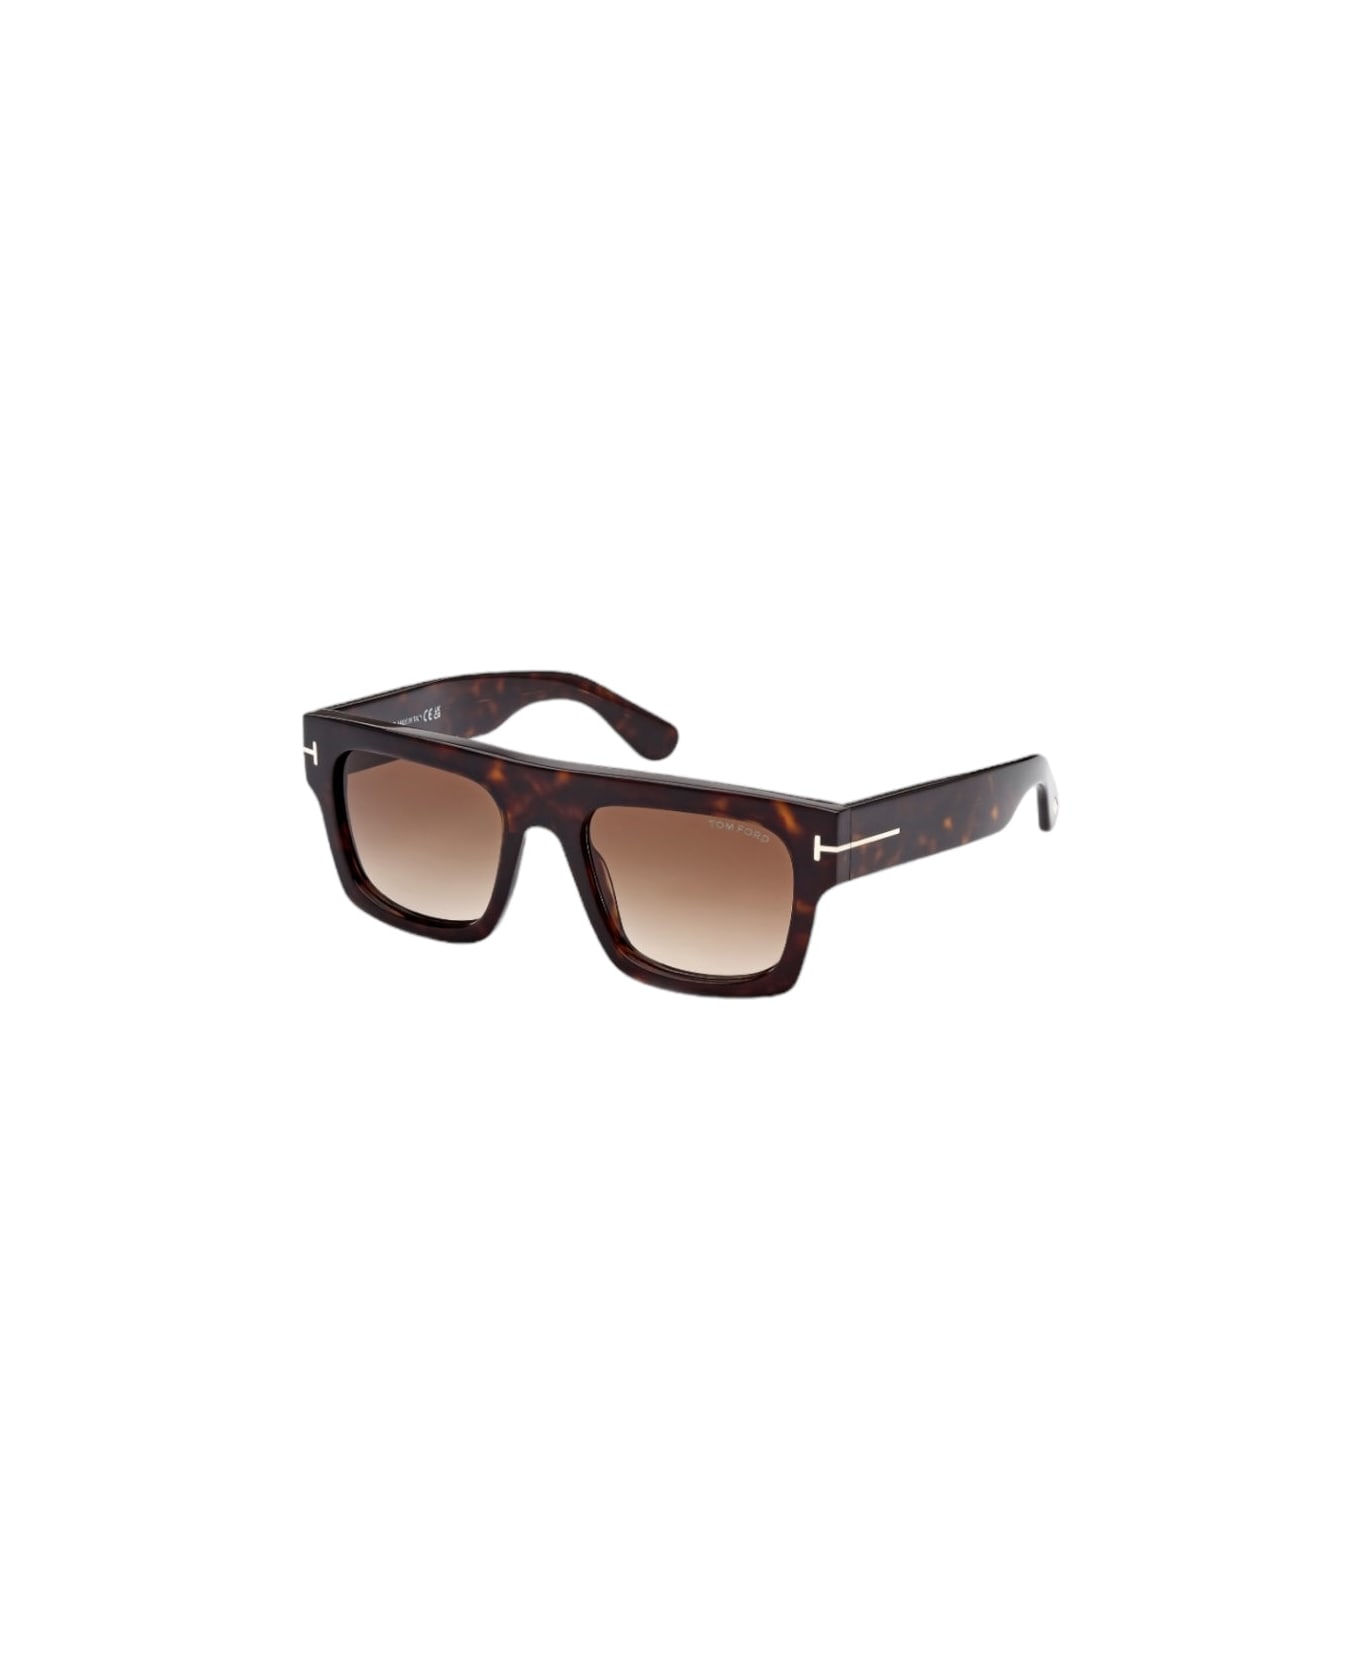 Tom Ford Eyewear Fausto - Ft 711 Sunglasses サングラス